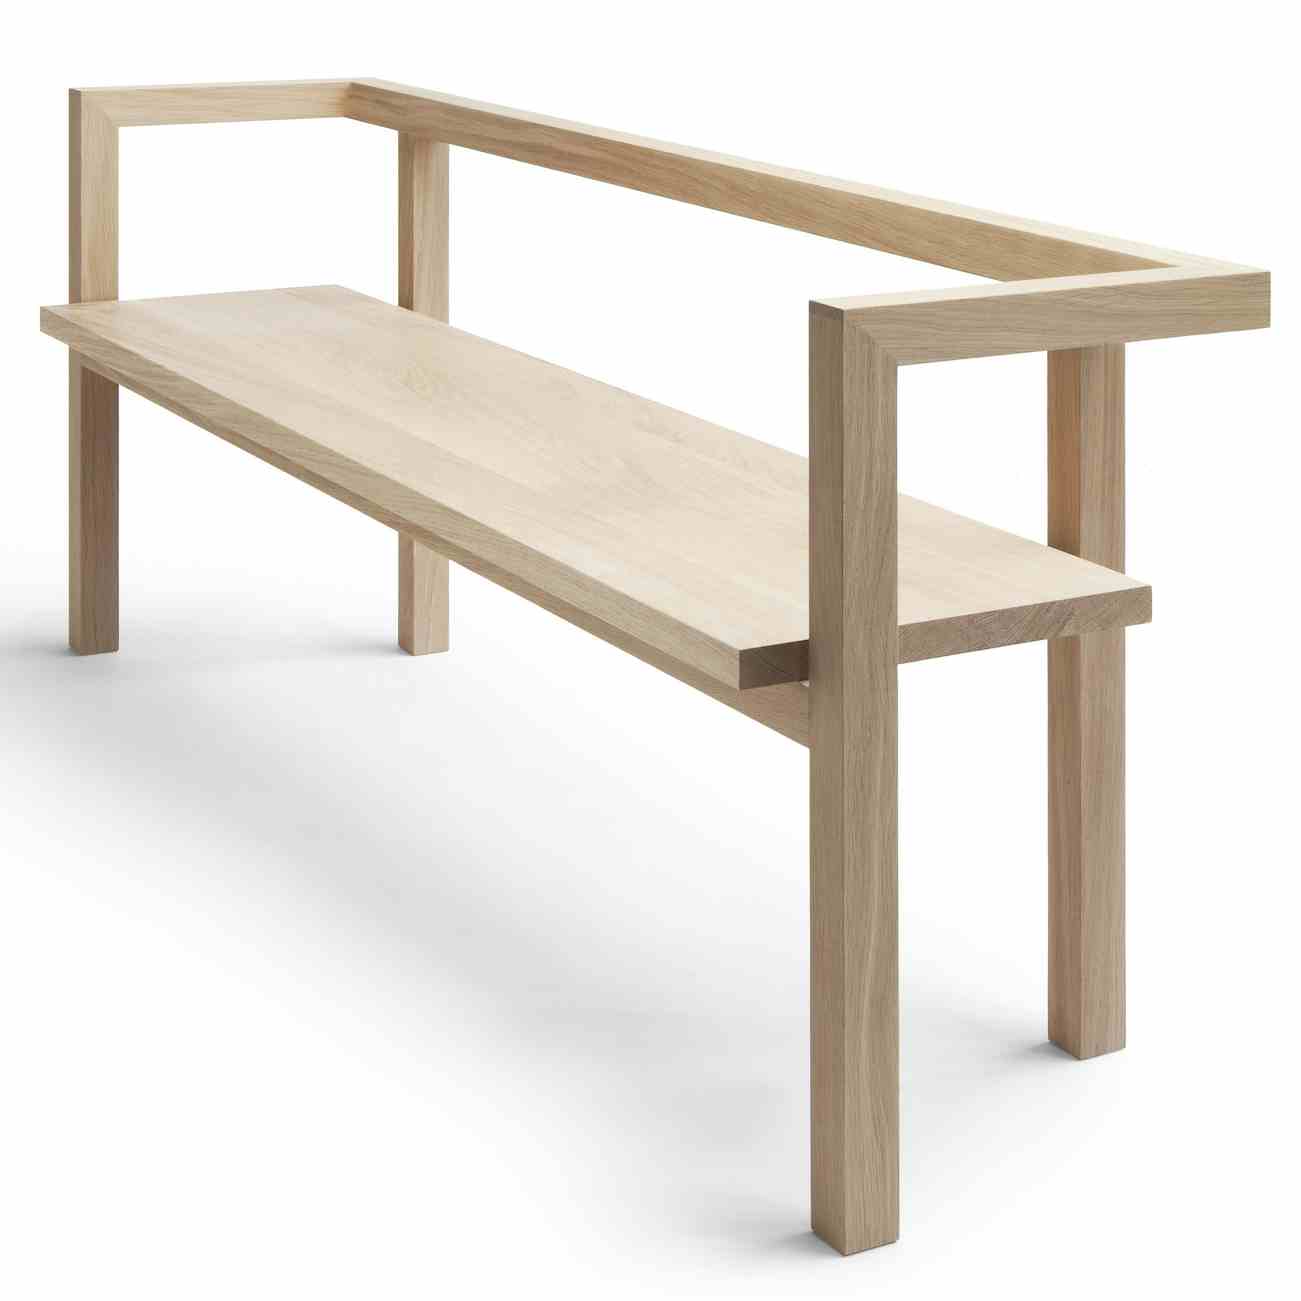 Nikari furniture konstructio bench angle haute living